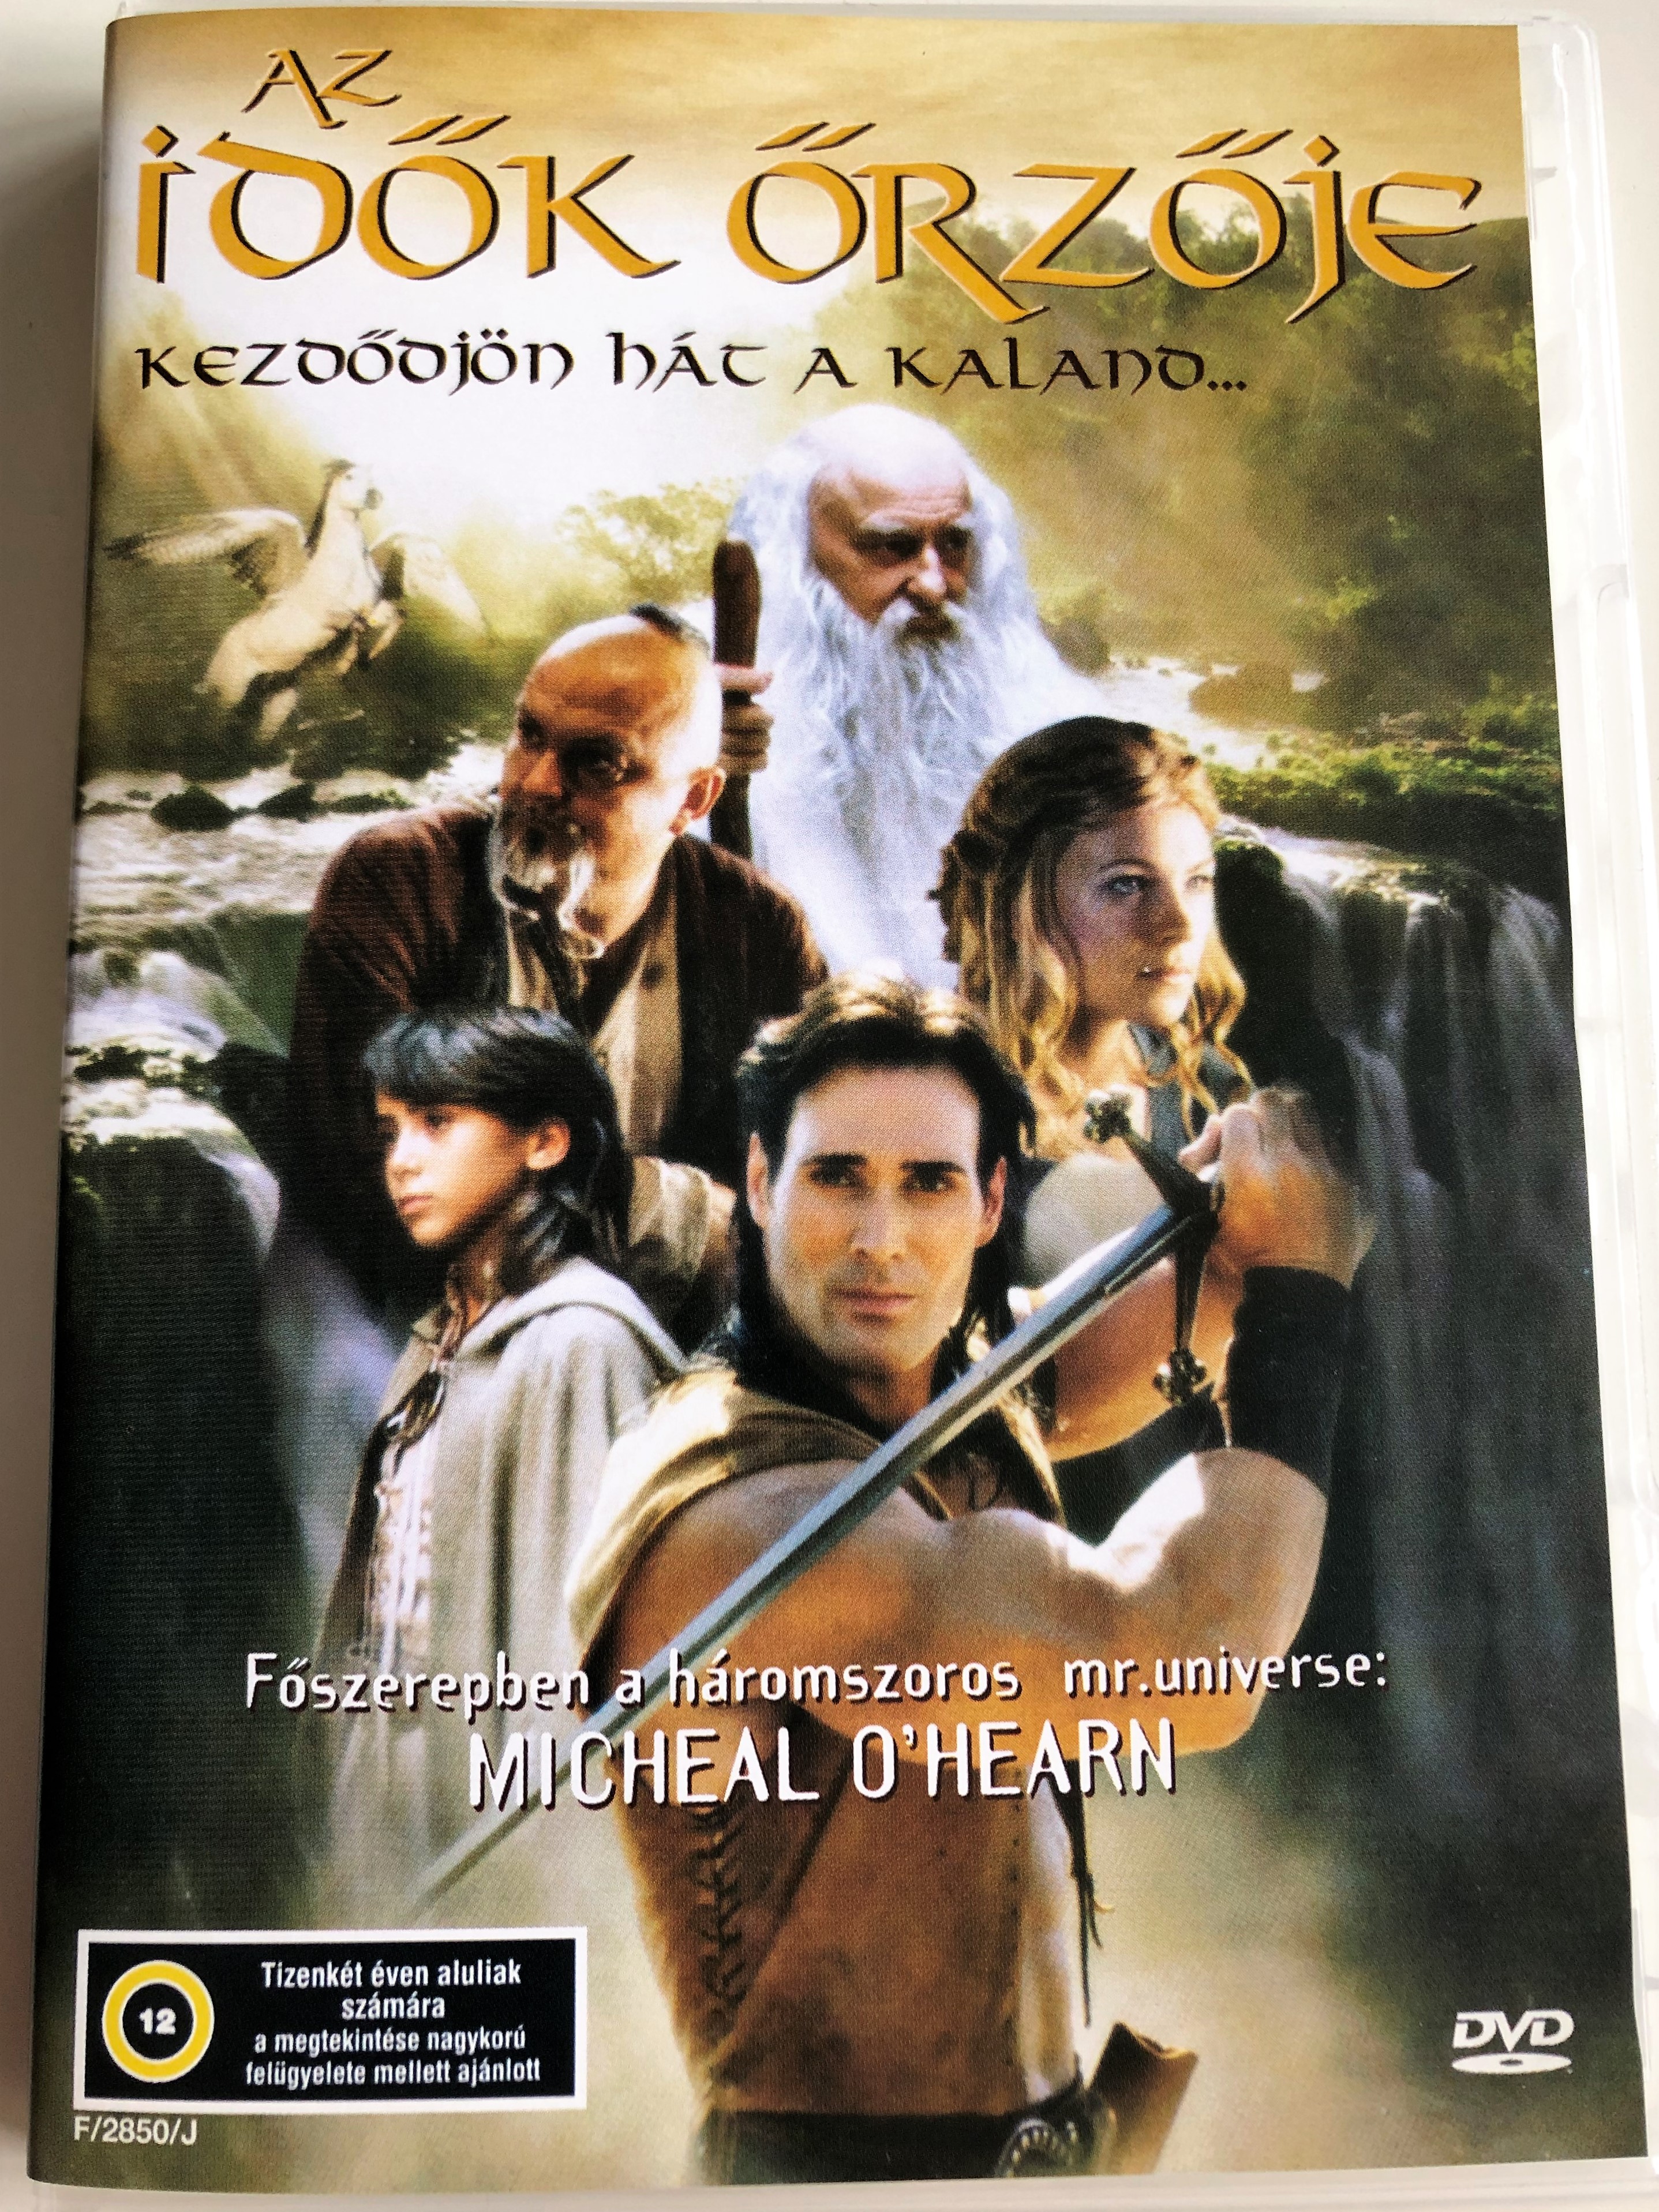 the-keeper-of-time-dvd-2004-az-id-k-rz-je-directed-by-robert-crombie-starring-michael-o-hearn-parker-alexander-anna-millchane-adam-t.-dawson-1-.jpg